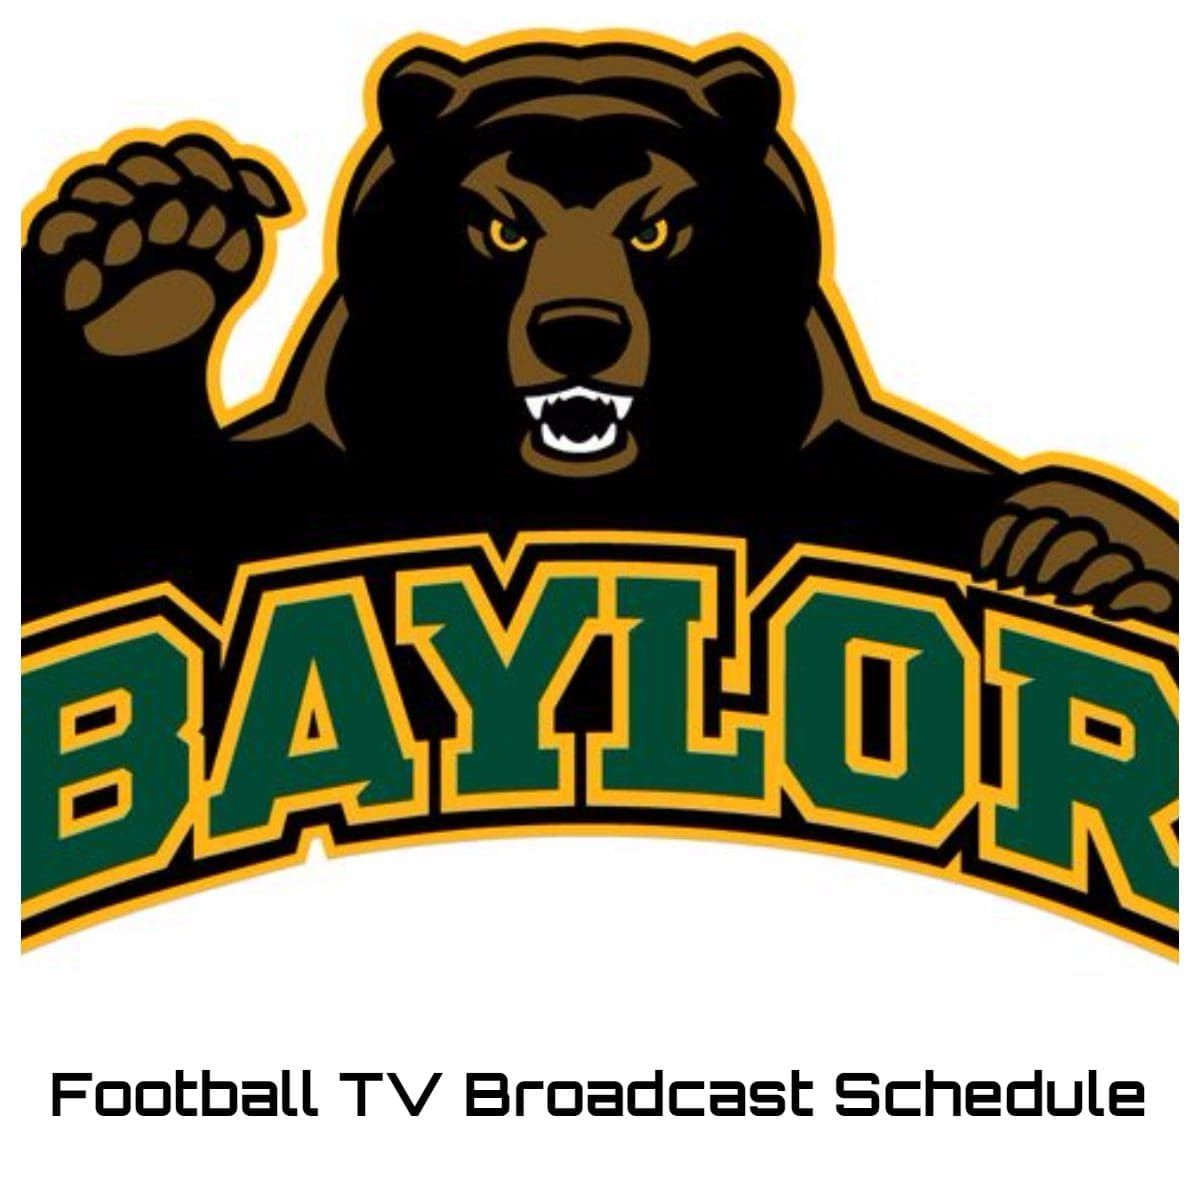 Baylor Bears Football TV Broadcast Schedule